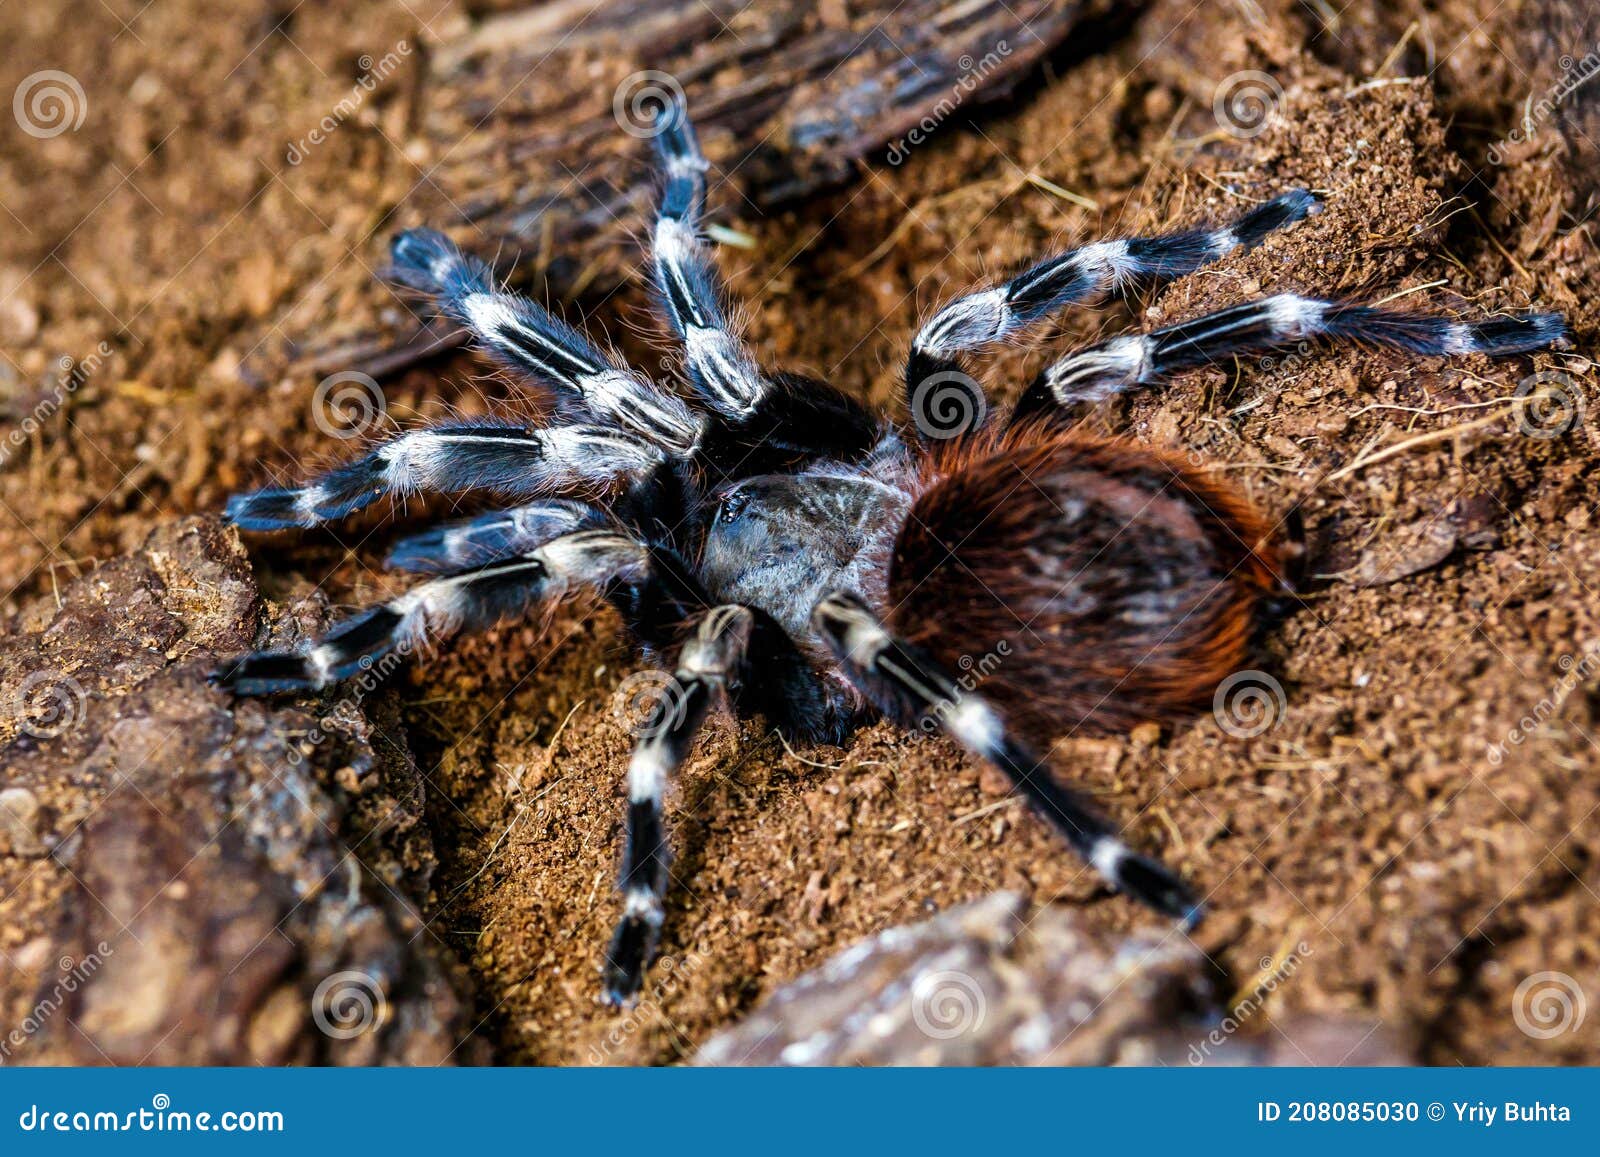 A Huge Spider,Red-Legged Costa Rican Tarantula the Biggest Tarantula in ...